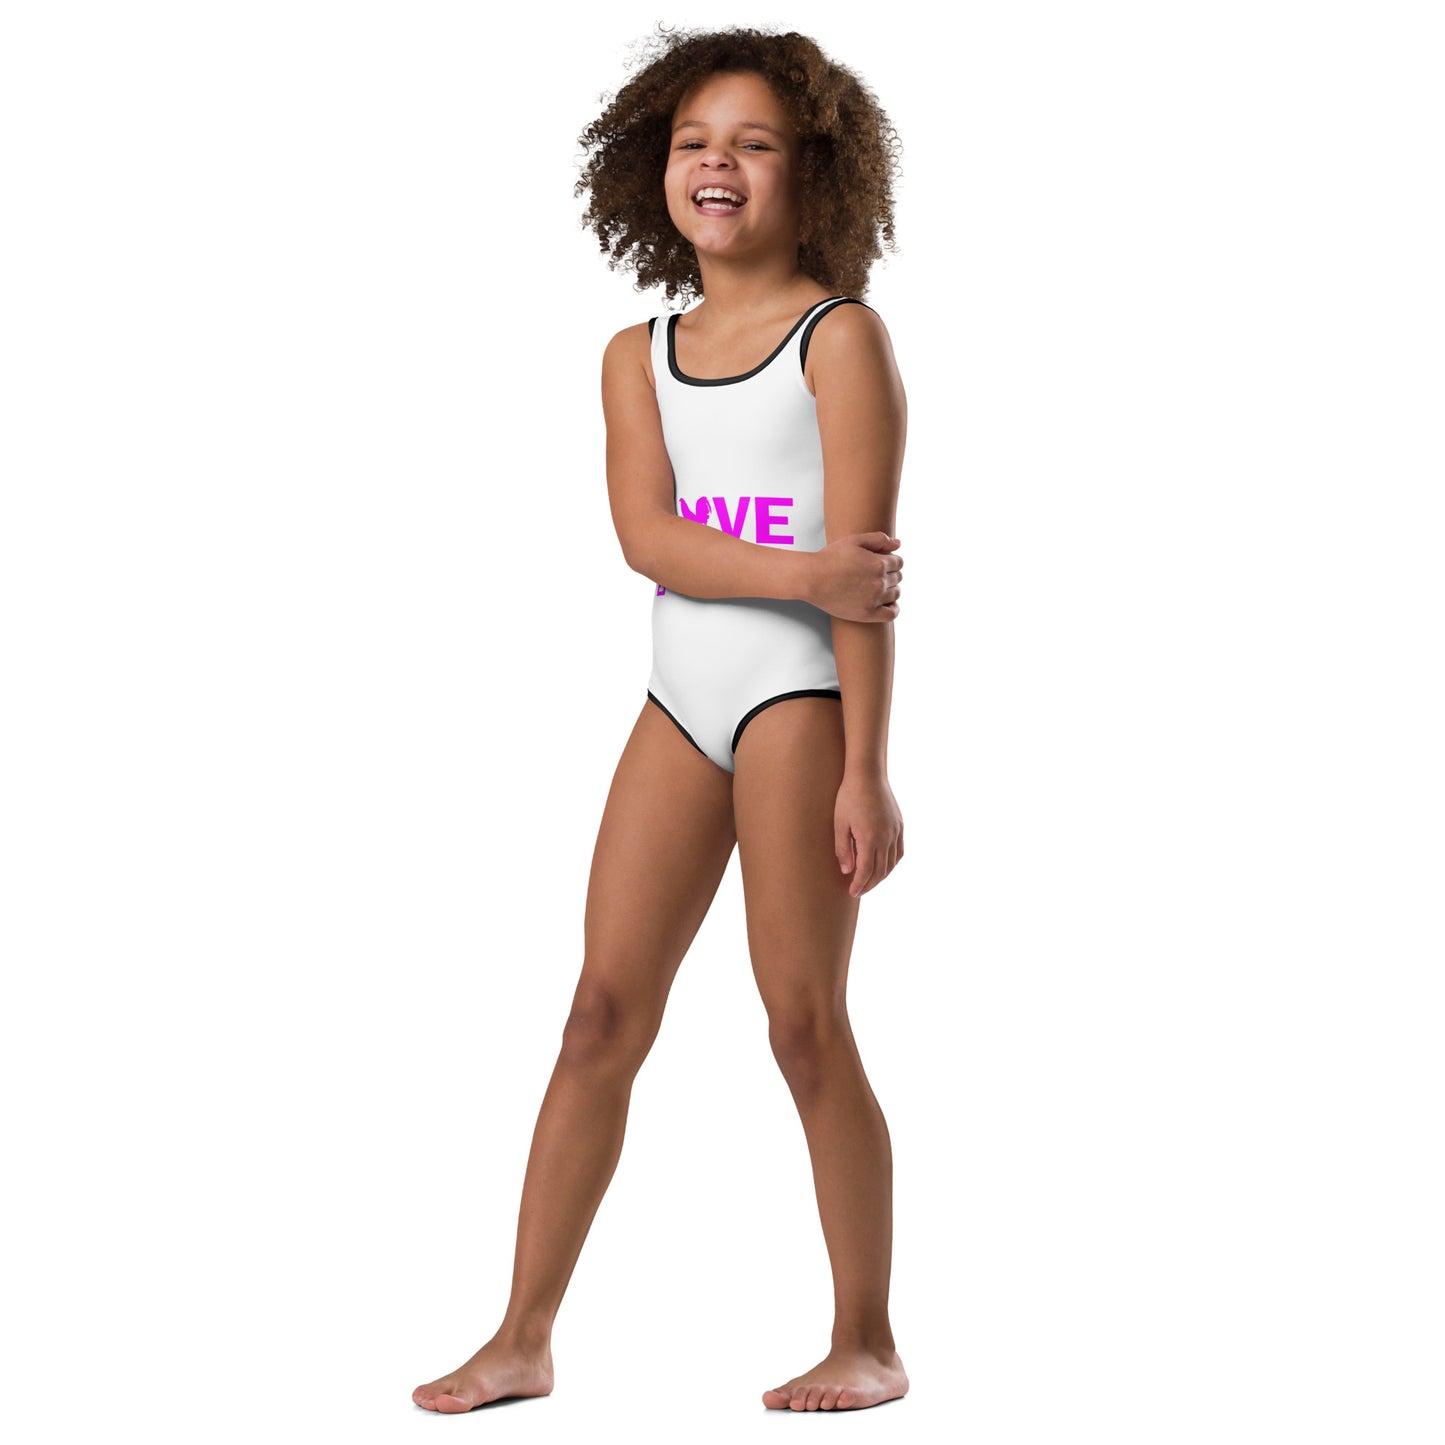 VS LOVE FOWL White and Pink Heart Gamefowl Kids Swimsuit